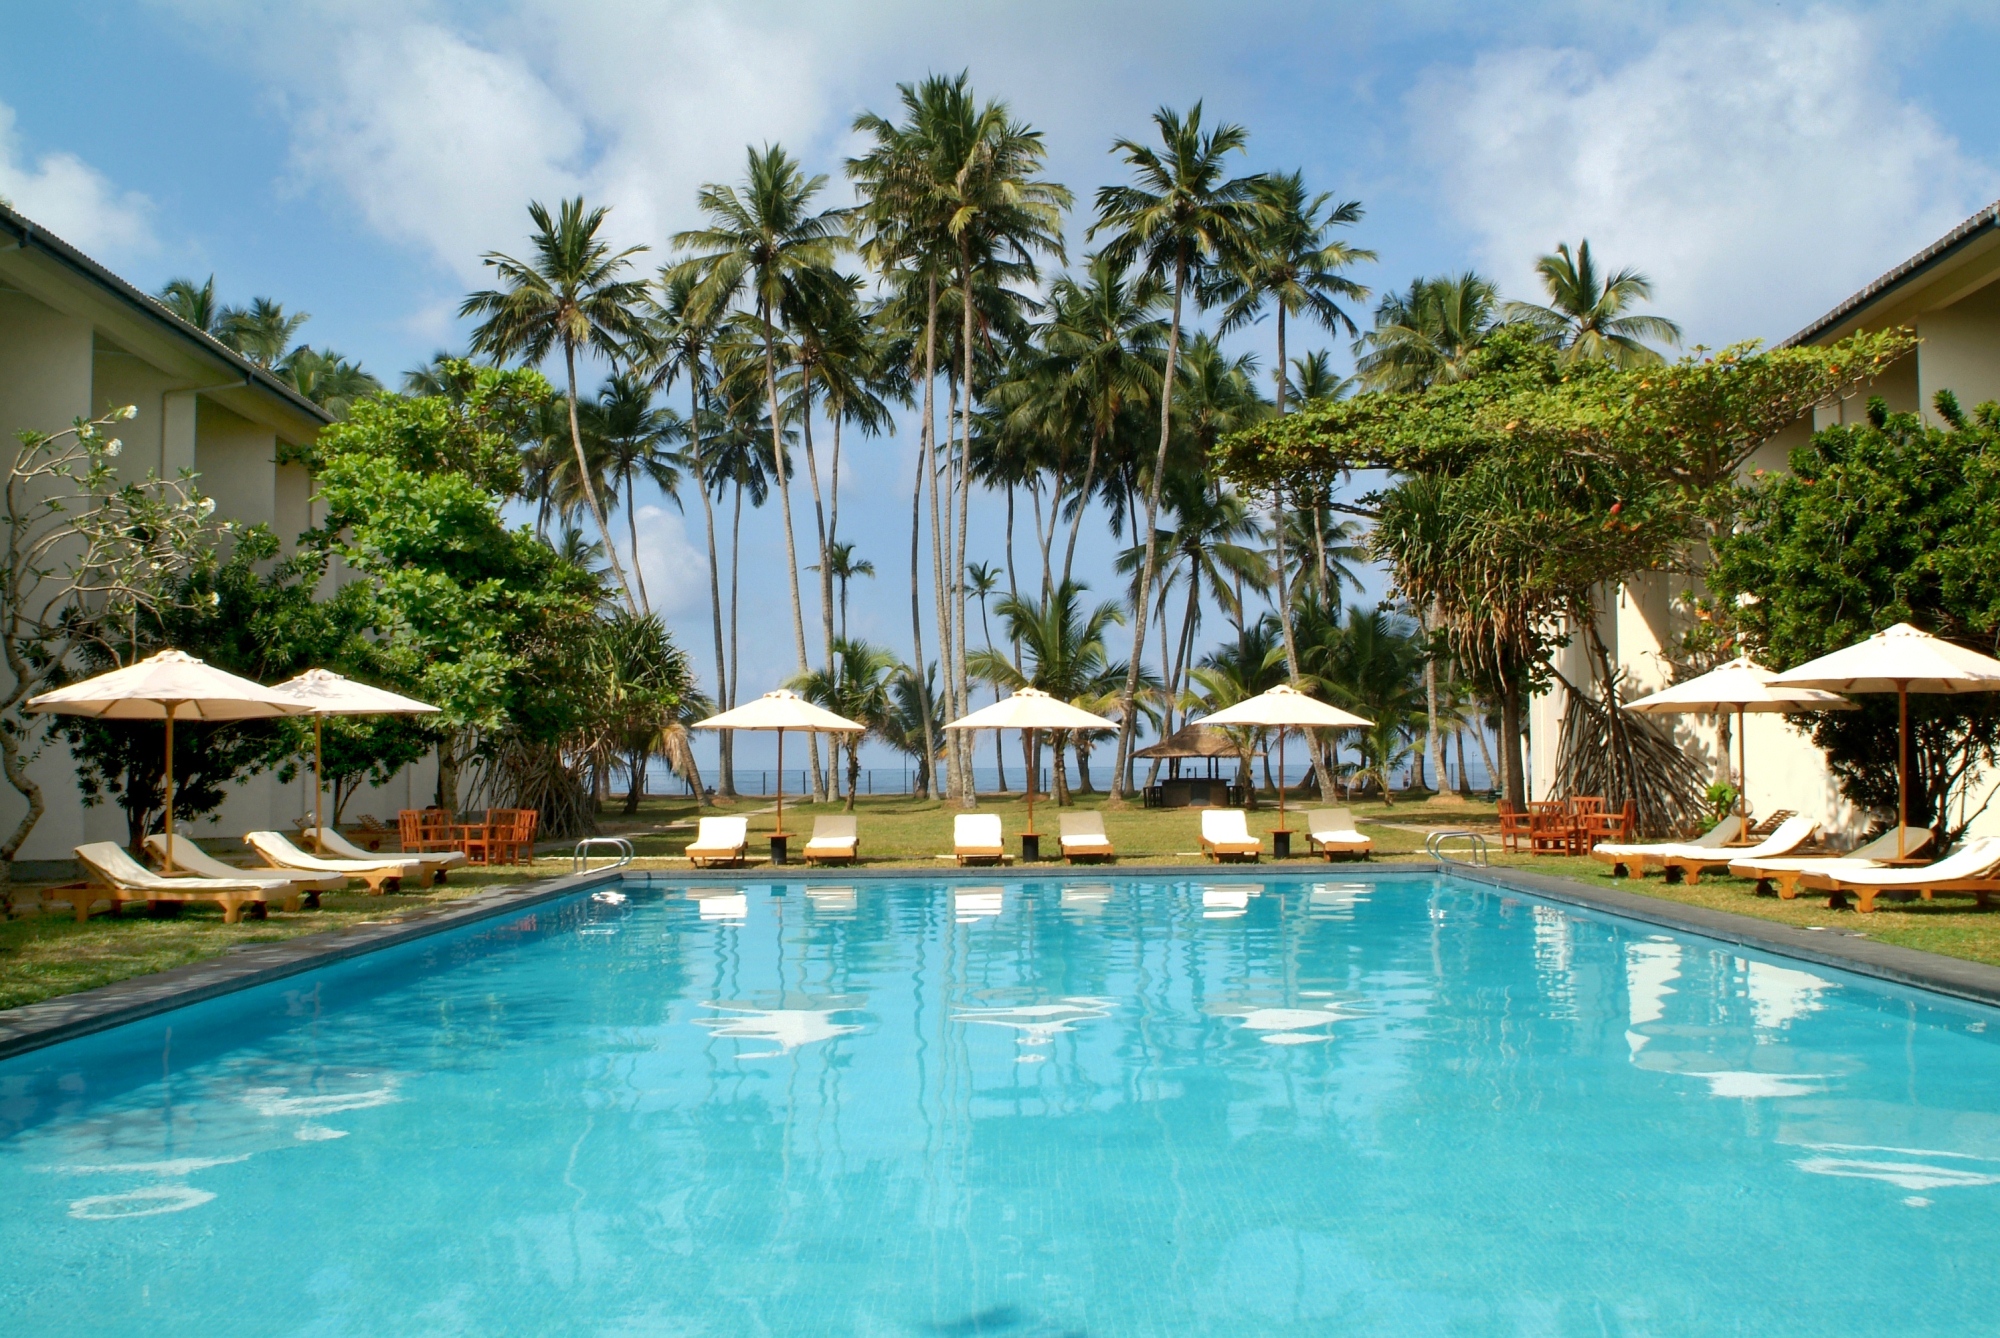 Mermaid Hotel And Club - Kalutara, Sri Lanka